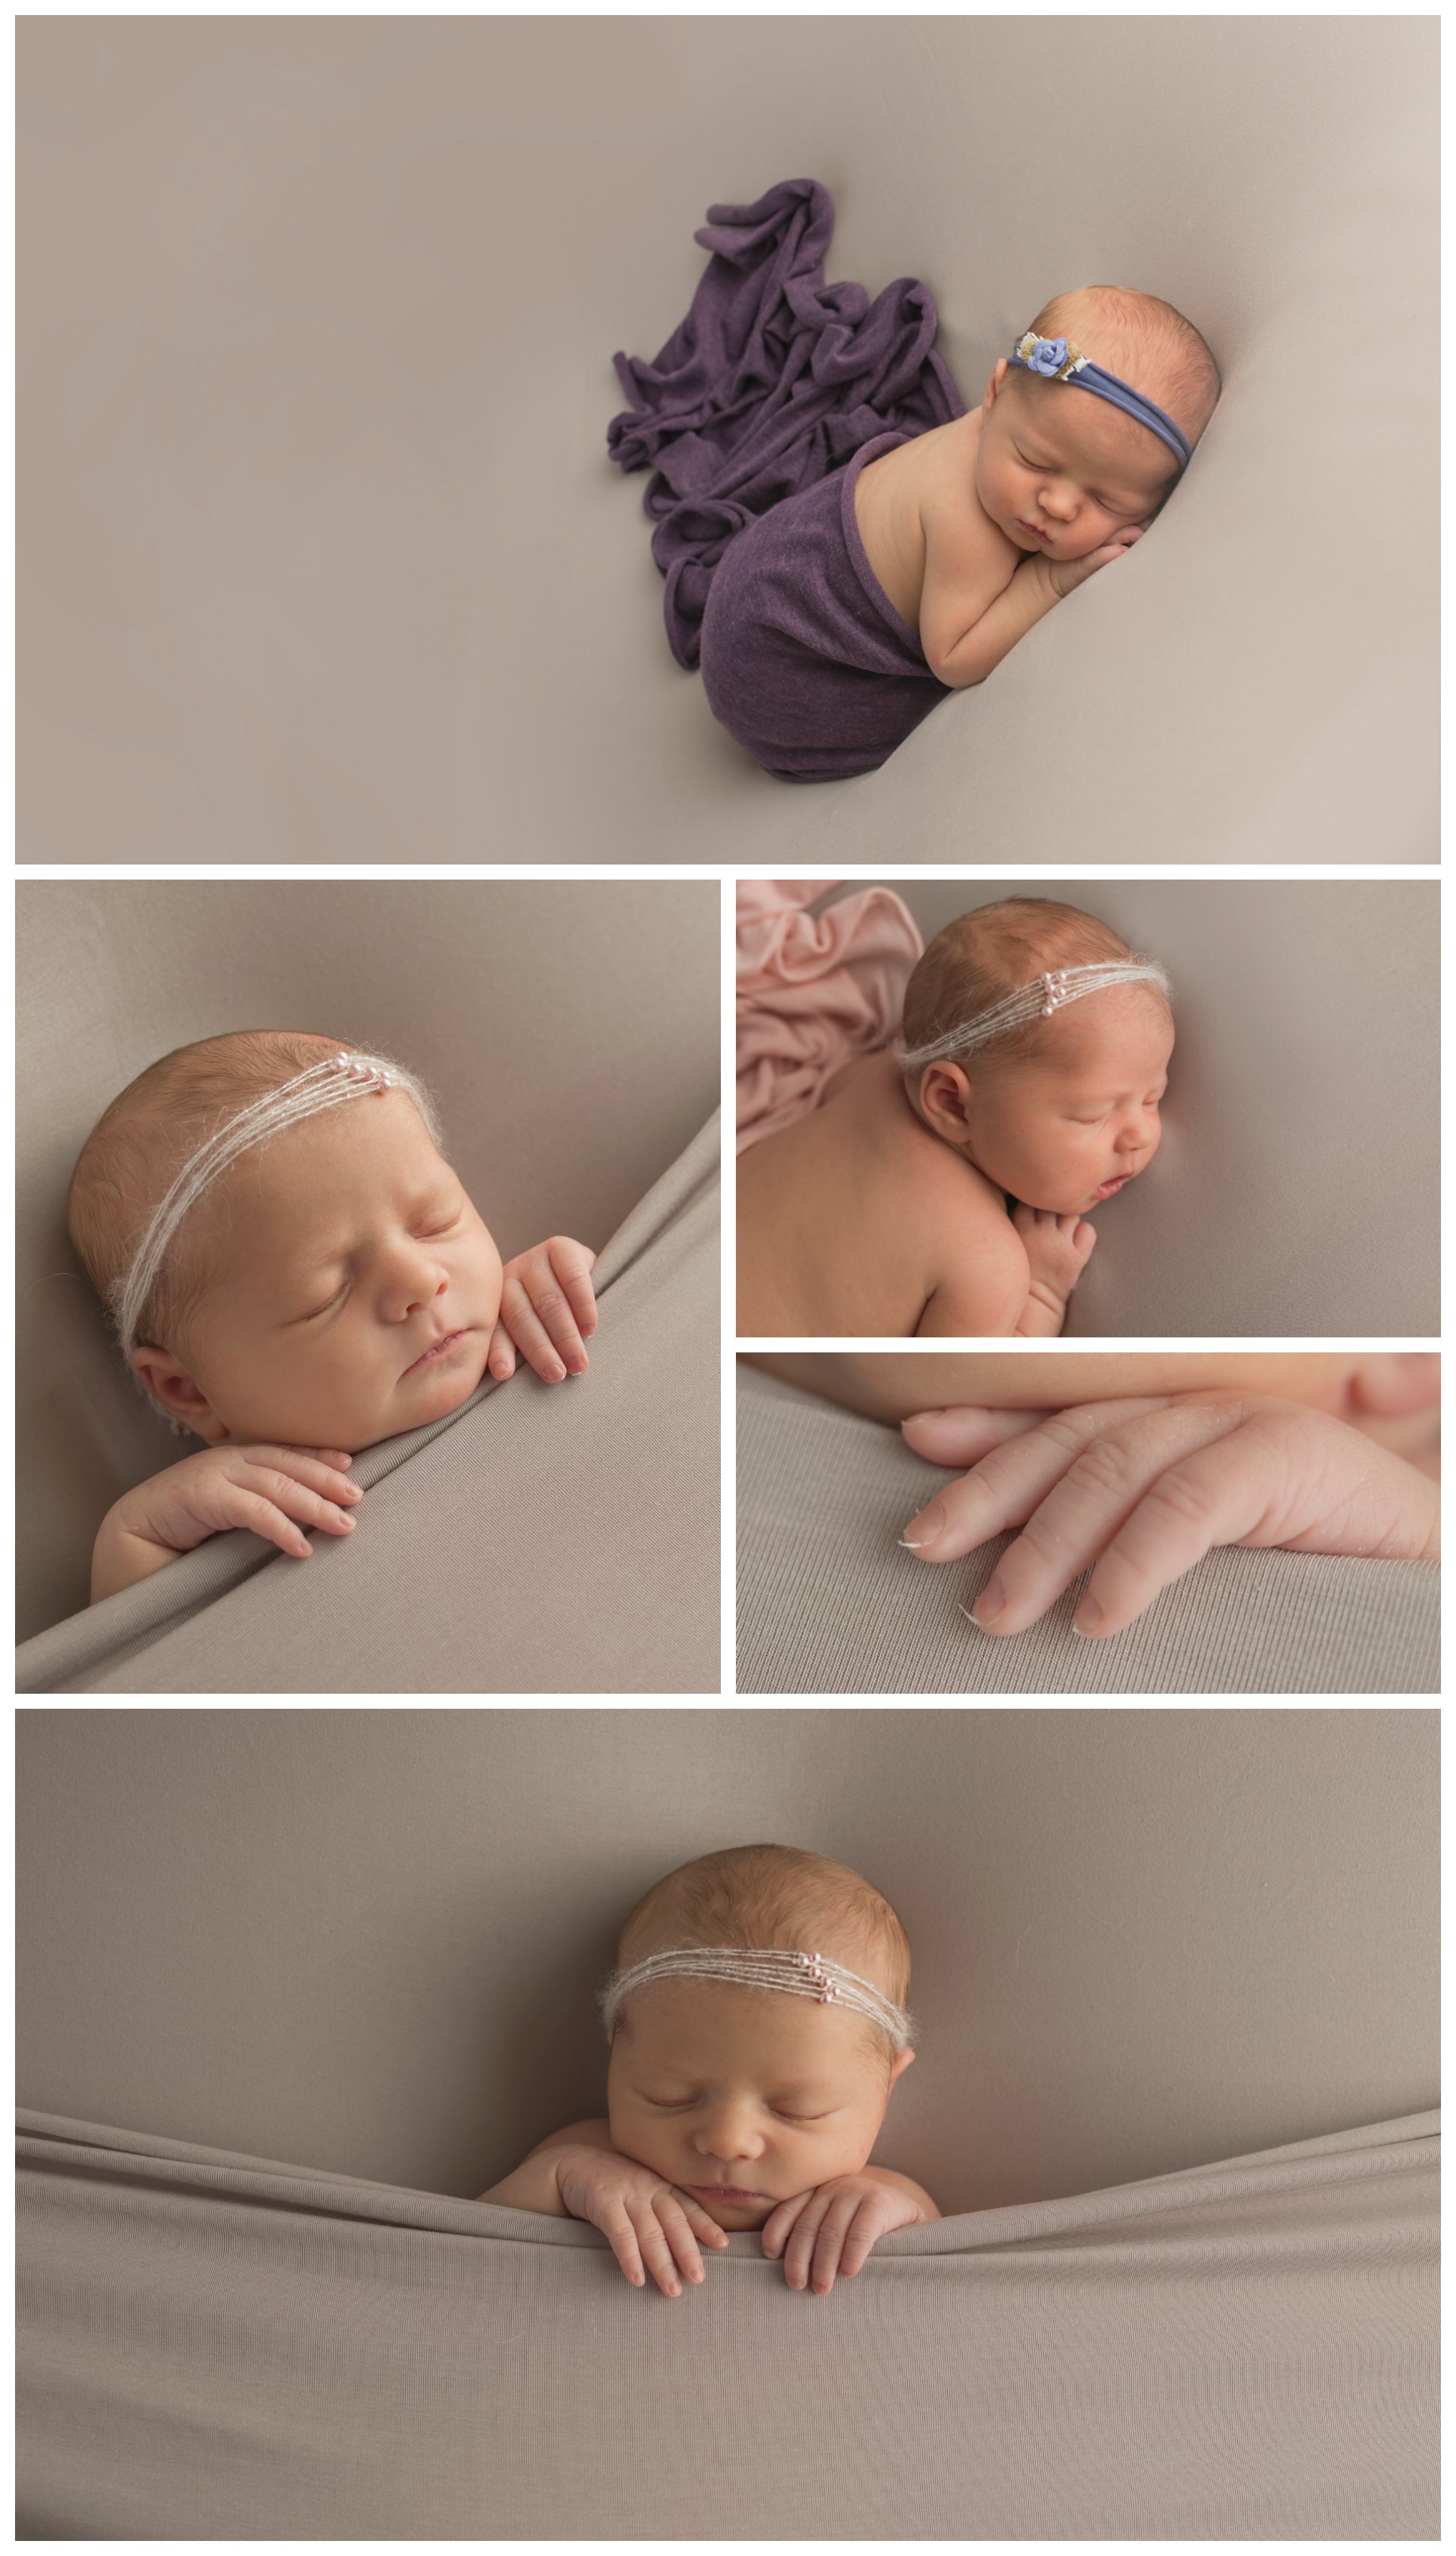 Little Dove Portraits - Newborn | Maternity | Baby | Family